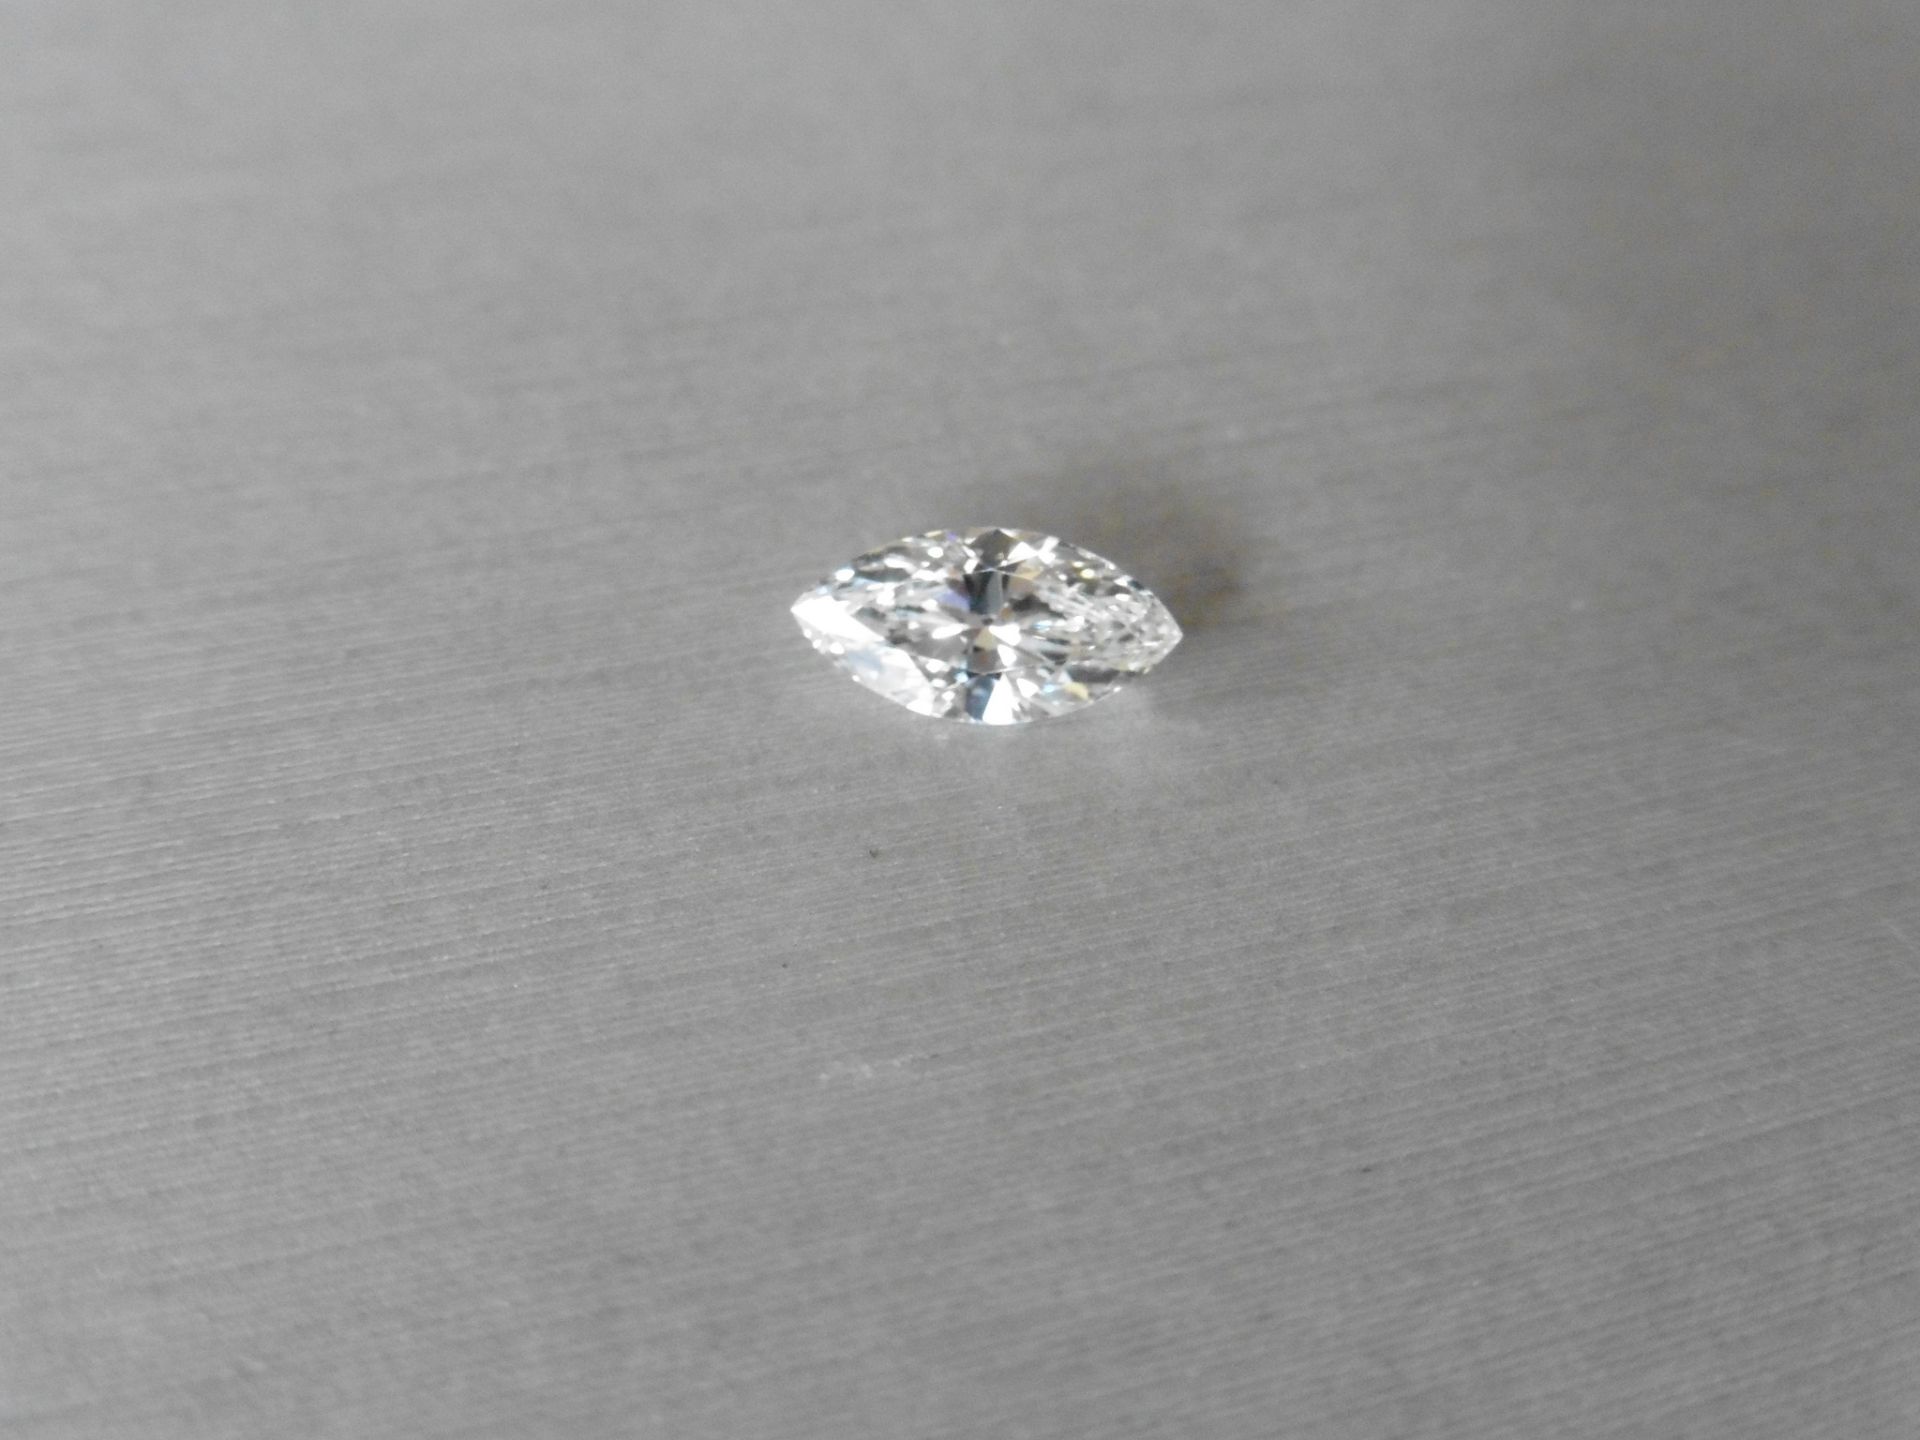 1.74ct single marquise cut diamond. Measurements 12.30 x 6.21 x 3.96mm. H colour, VS1 clarity.